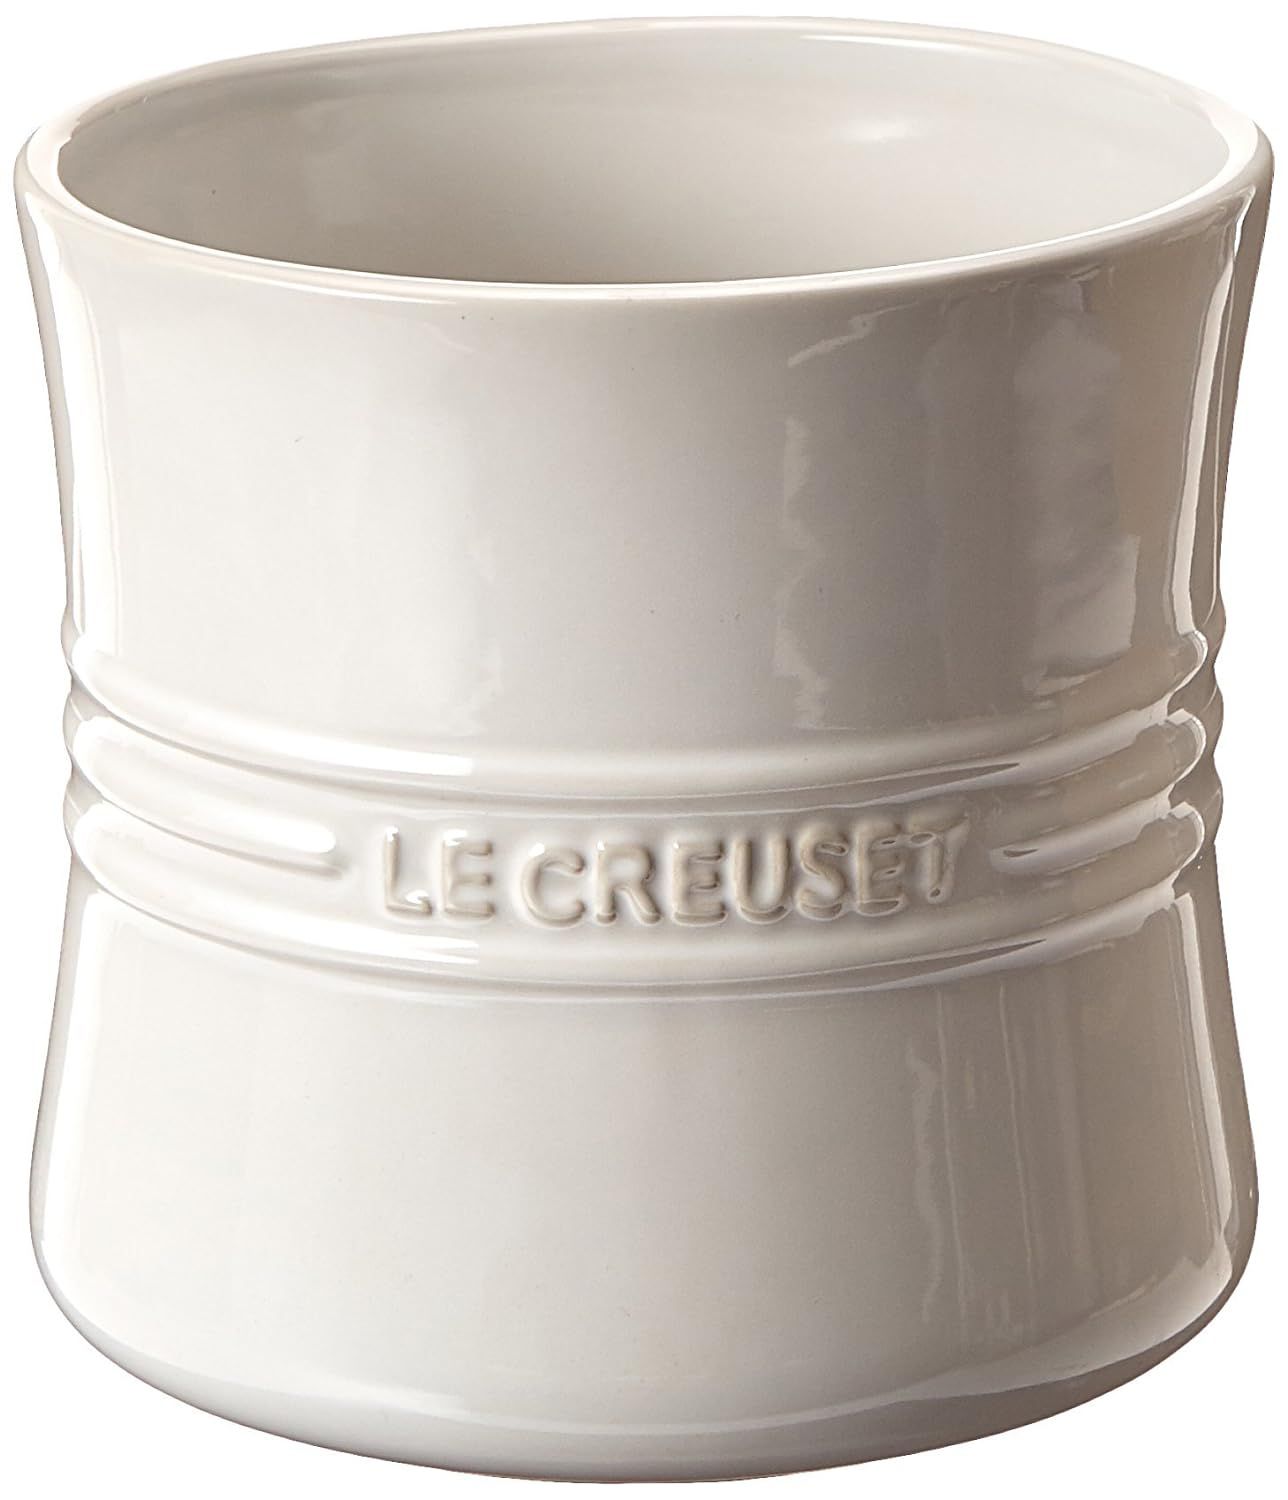 Le Creuset PG1003-16 Stoneware Utensil Crock, 2 3/4-Quart, White | Amazon (US)